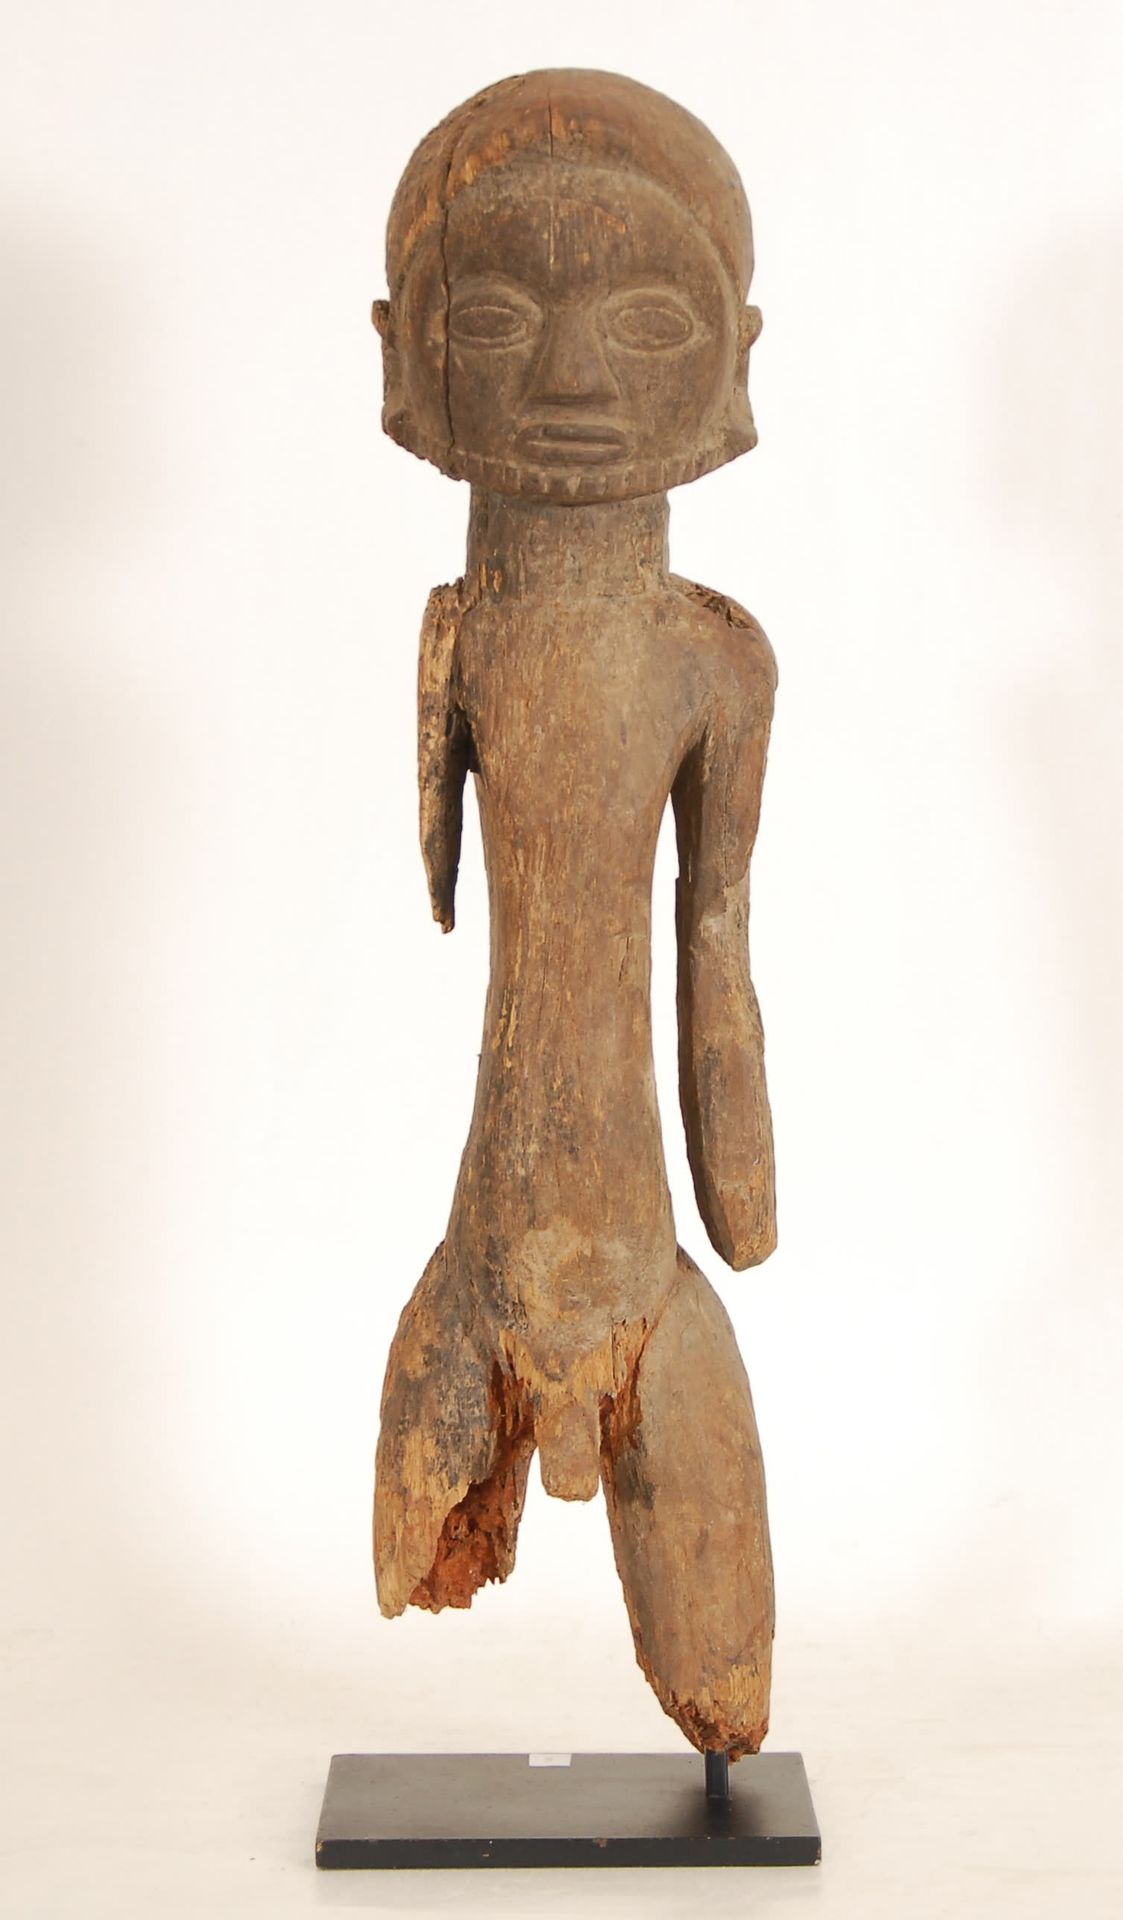 Afrique - Africa Luba figure
Sculpted wood. Democratic Republic of Congo.
H. 62,&hellip;